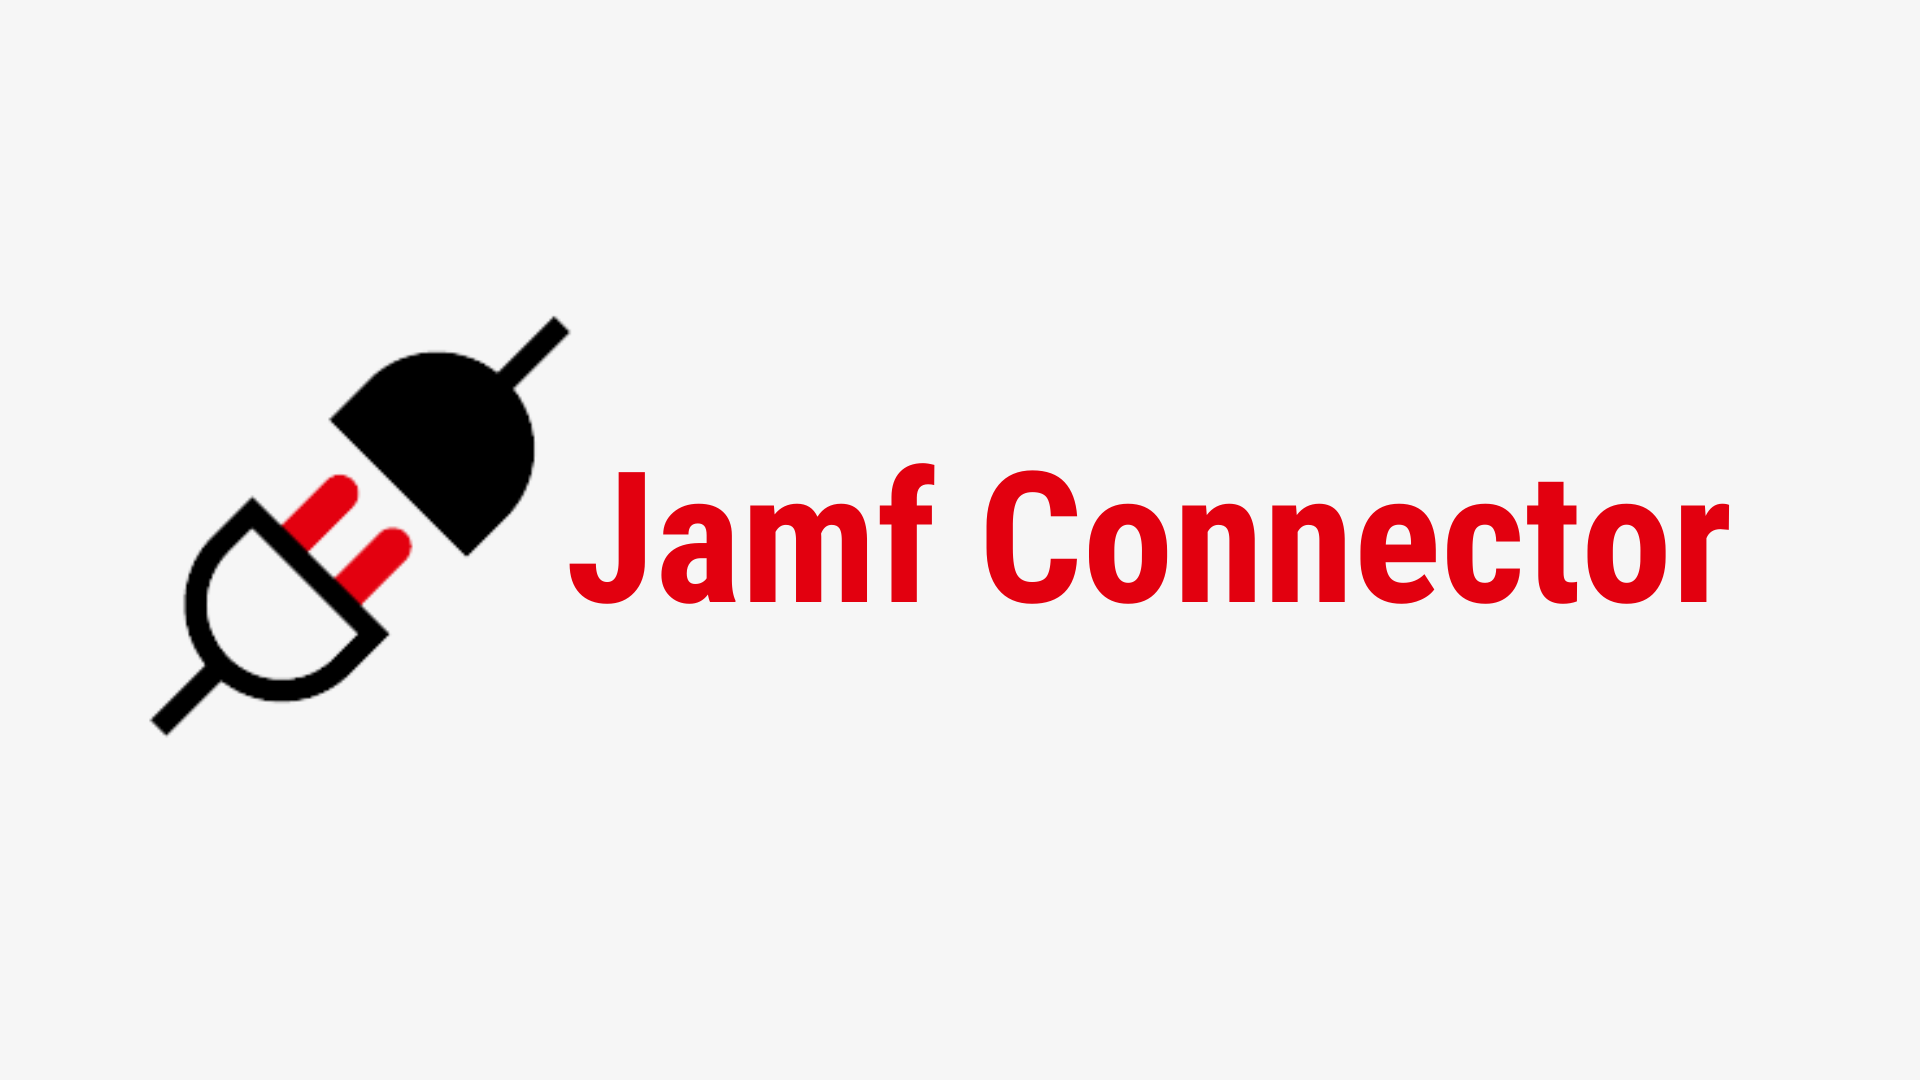 Jamf Connector News